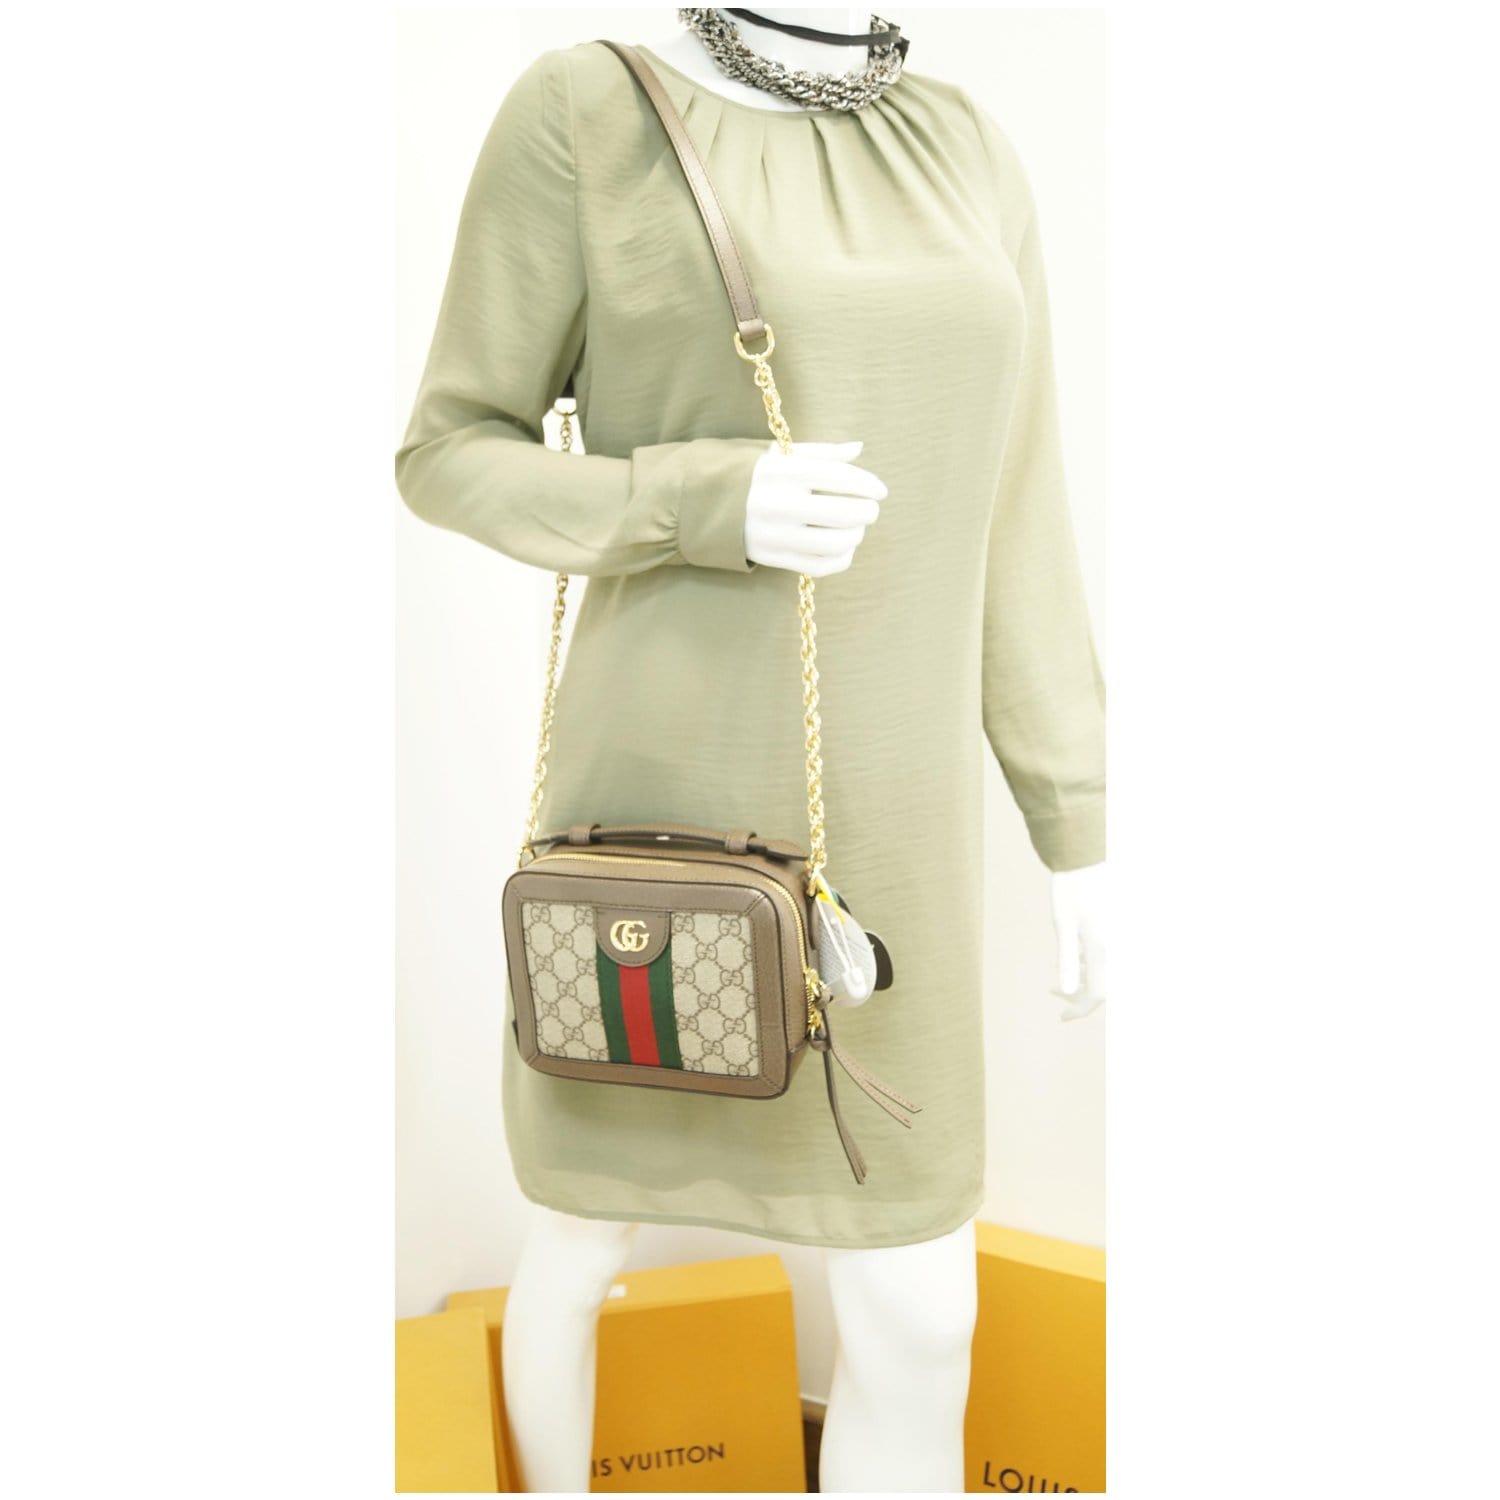 Gucci Attache medium shoulder bag in beige and ebony Supreme